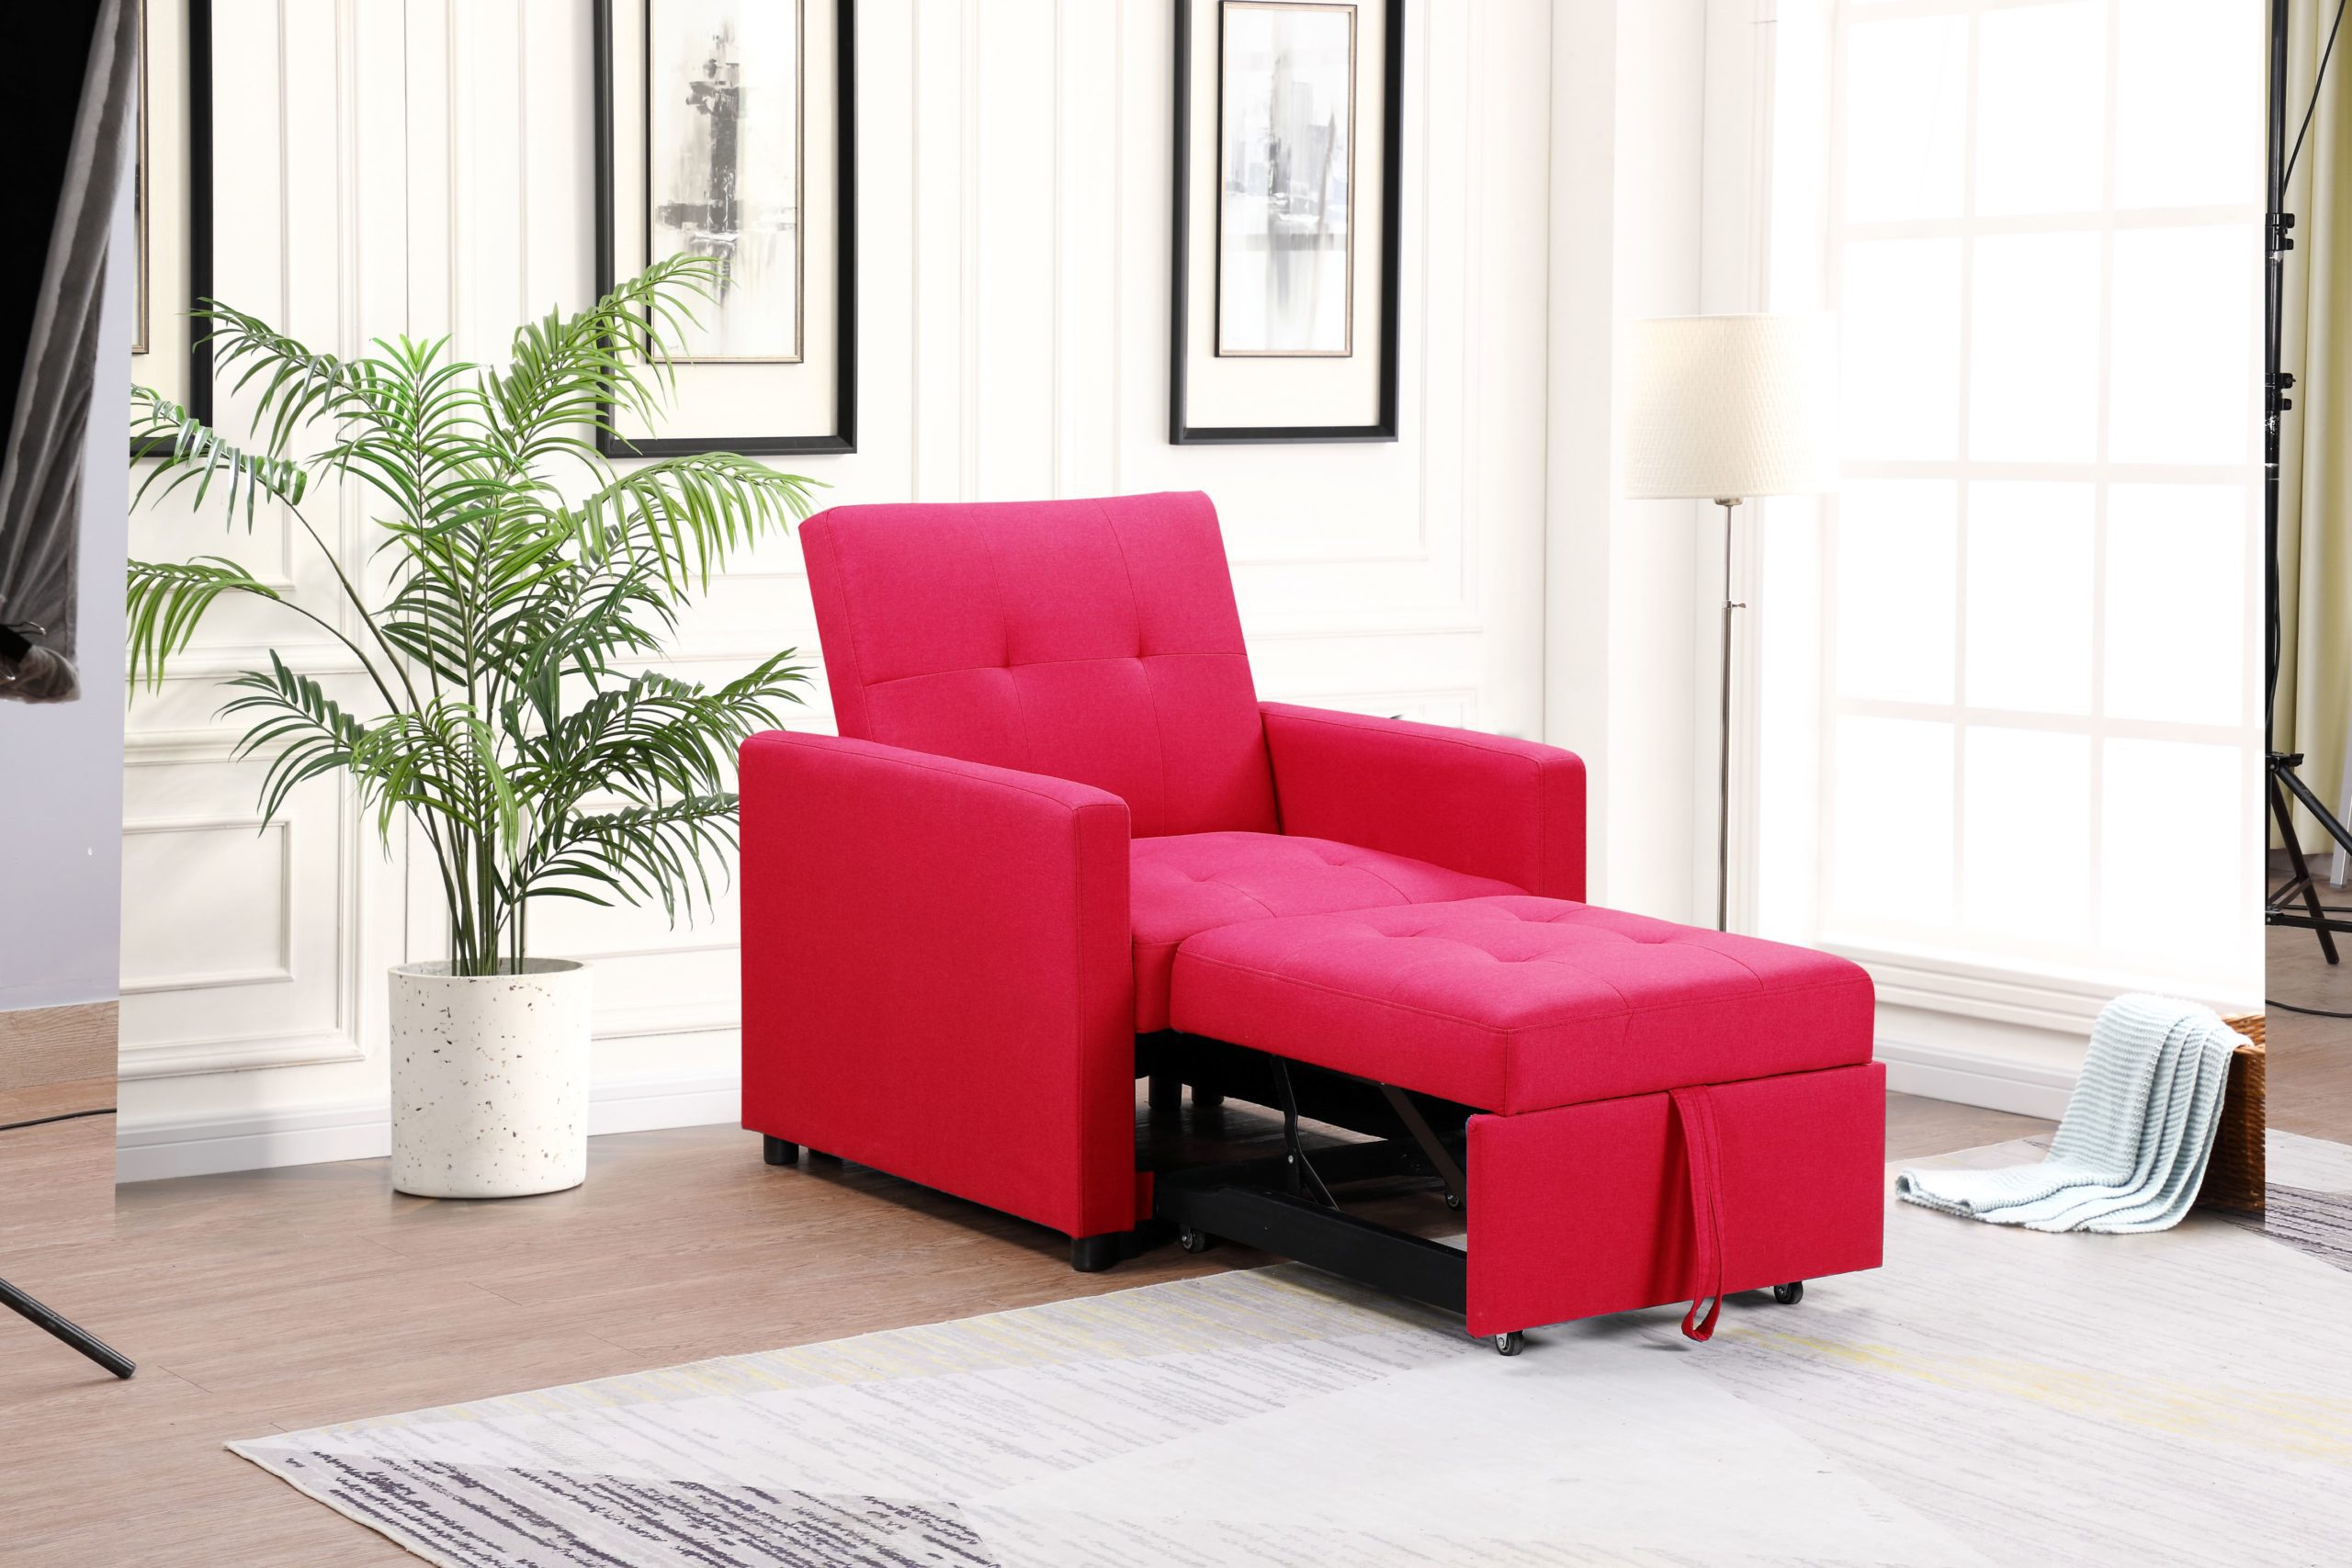 Dongguan Lovehome Furniture Co Ltd